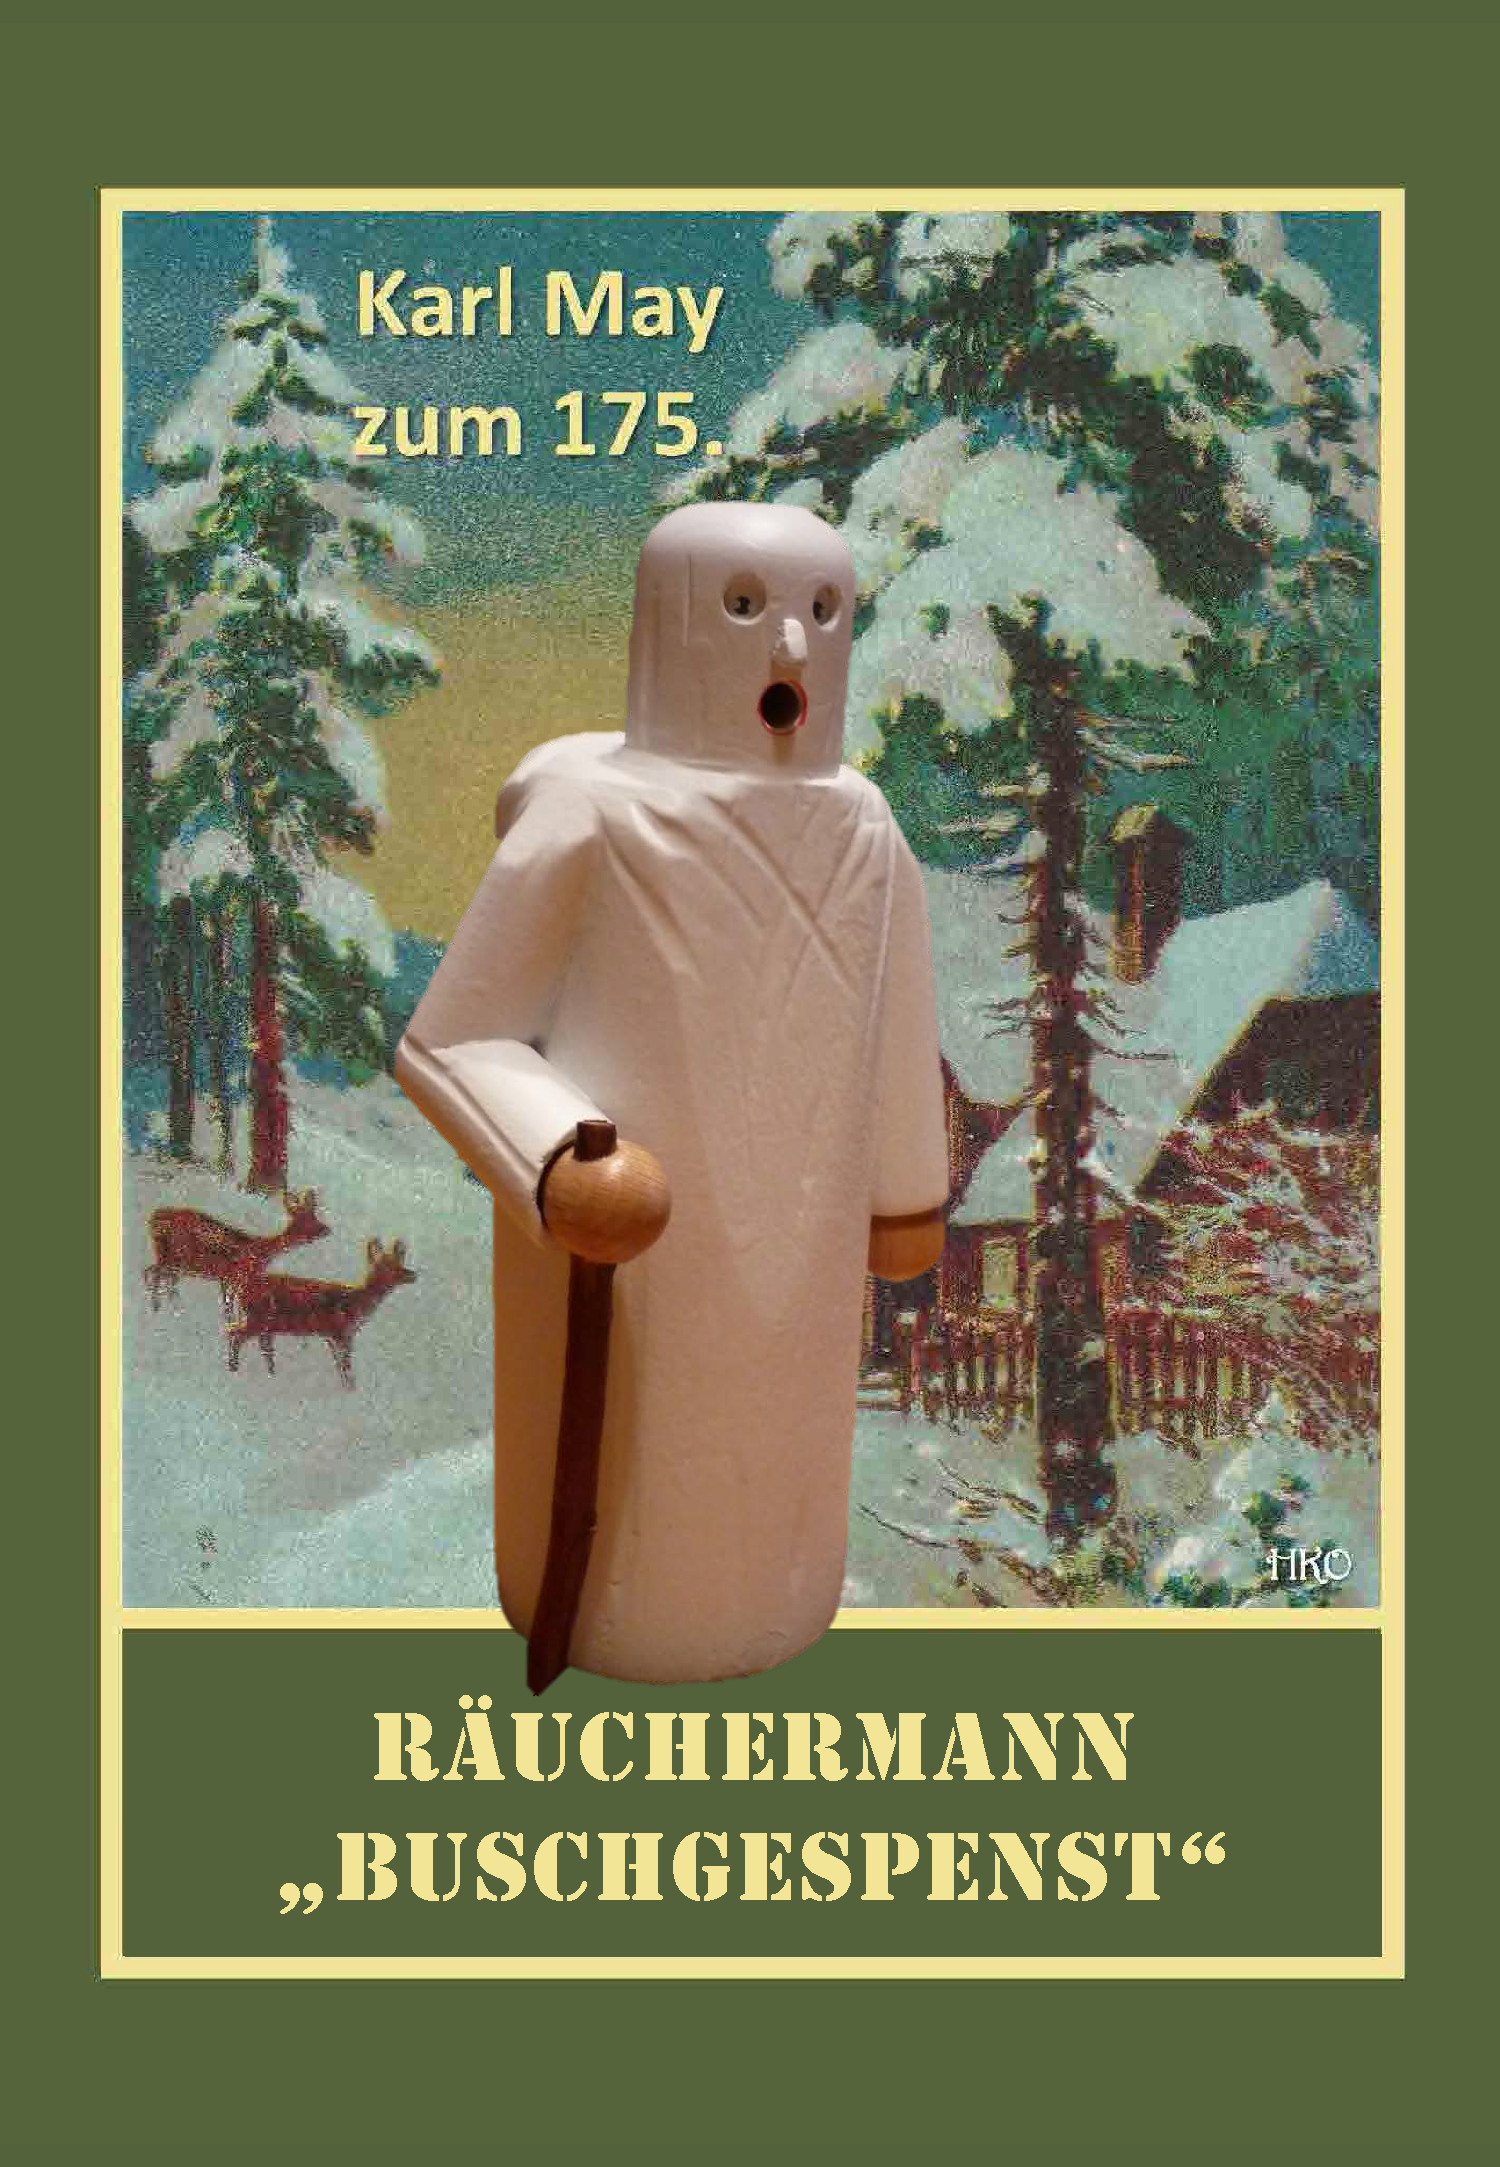 Raeuchermann-Plakat.png